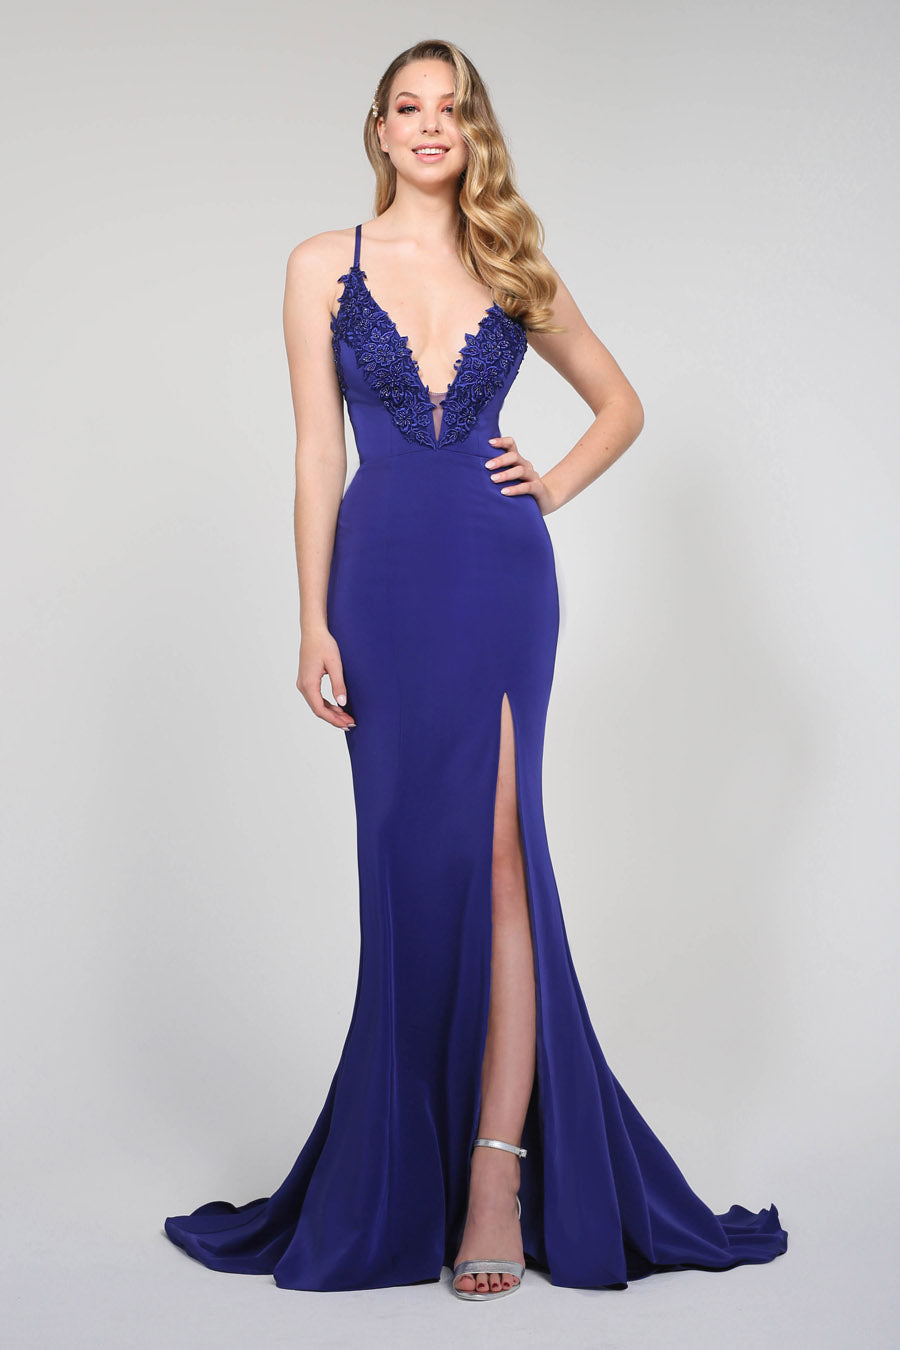 Tina Holly Couture Designer BA111 Blue Purple Satin Mermaid Formal Dress Tina Holly Couture$ AfterPay Humm ZipPay LayBuy Sezzle